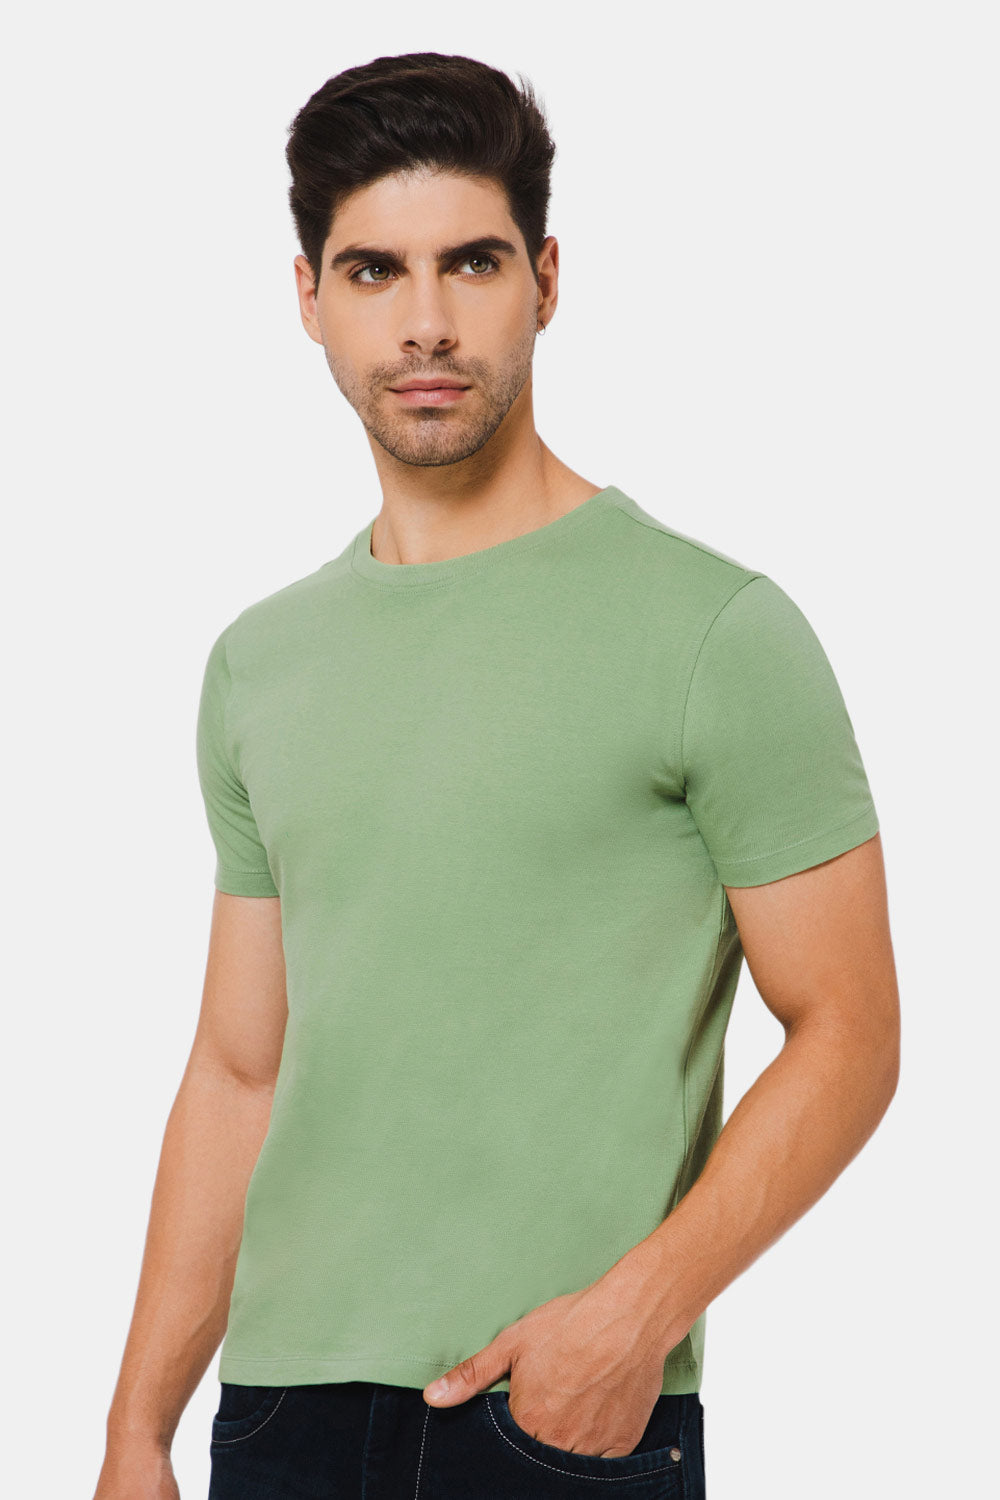 Naidu Hall Enhance Crew Cotton Tshirt- Green - SN04